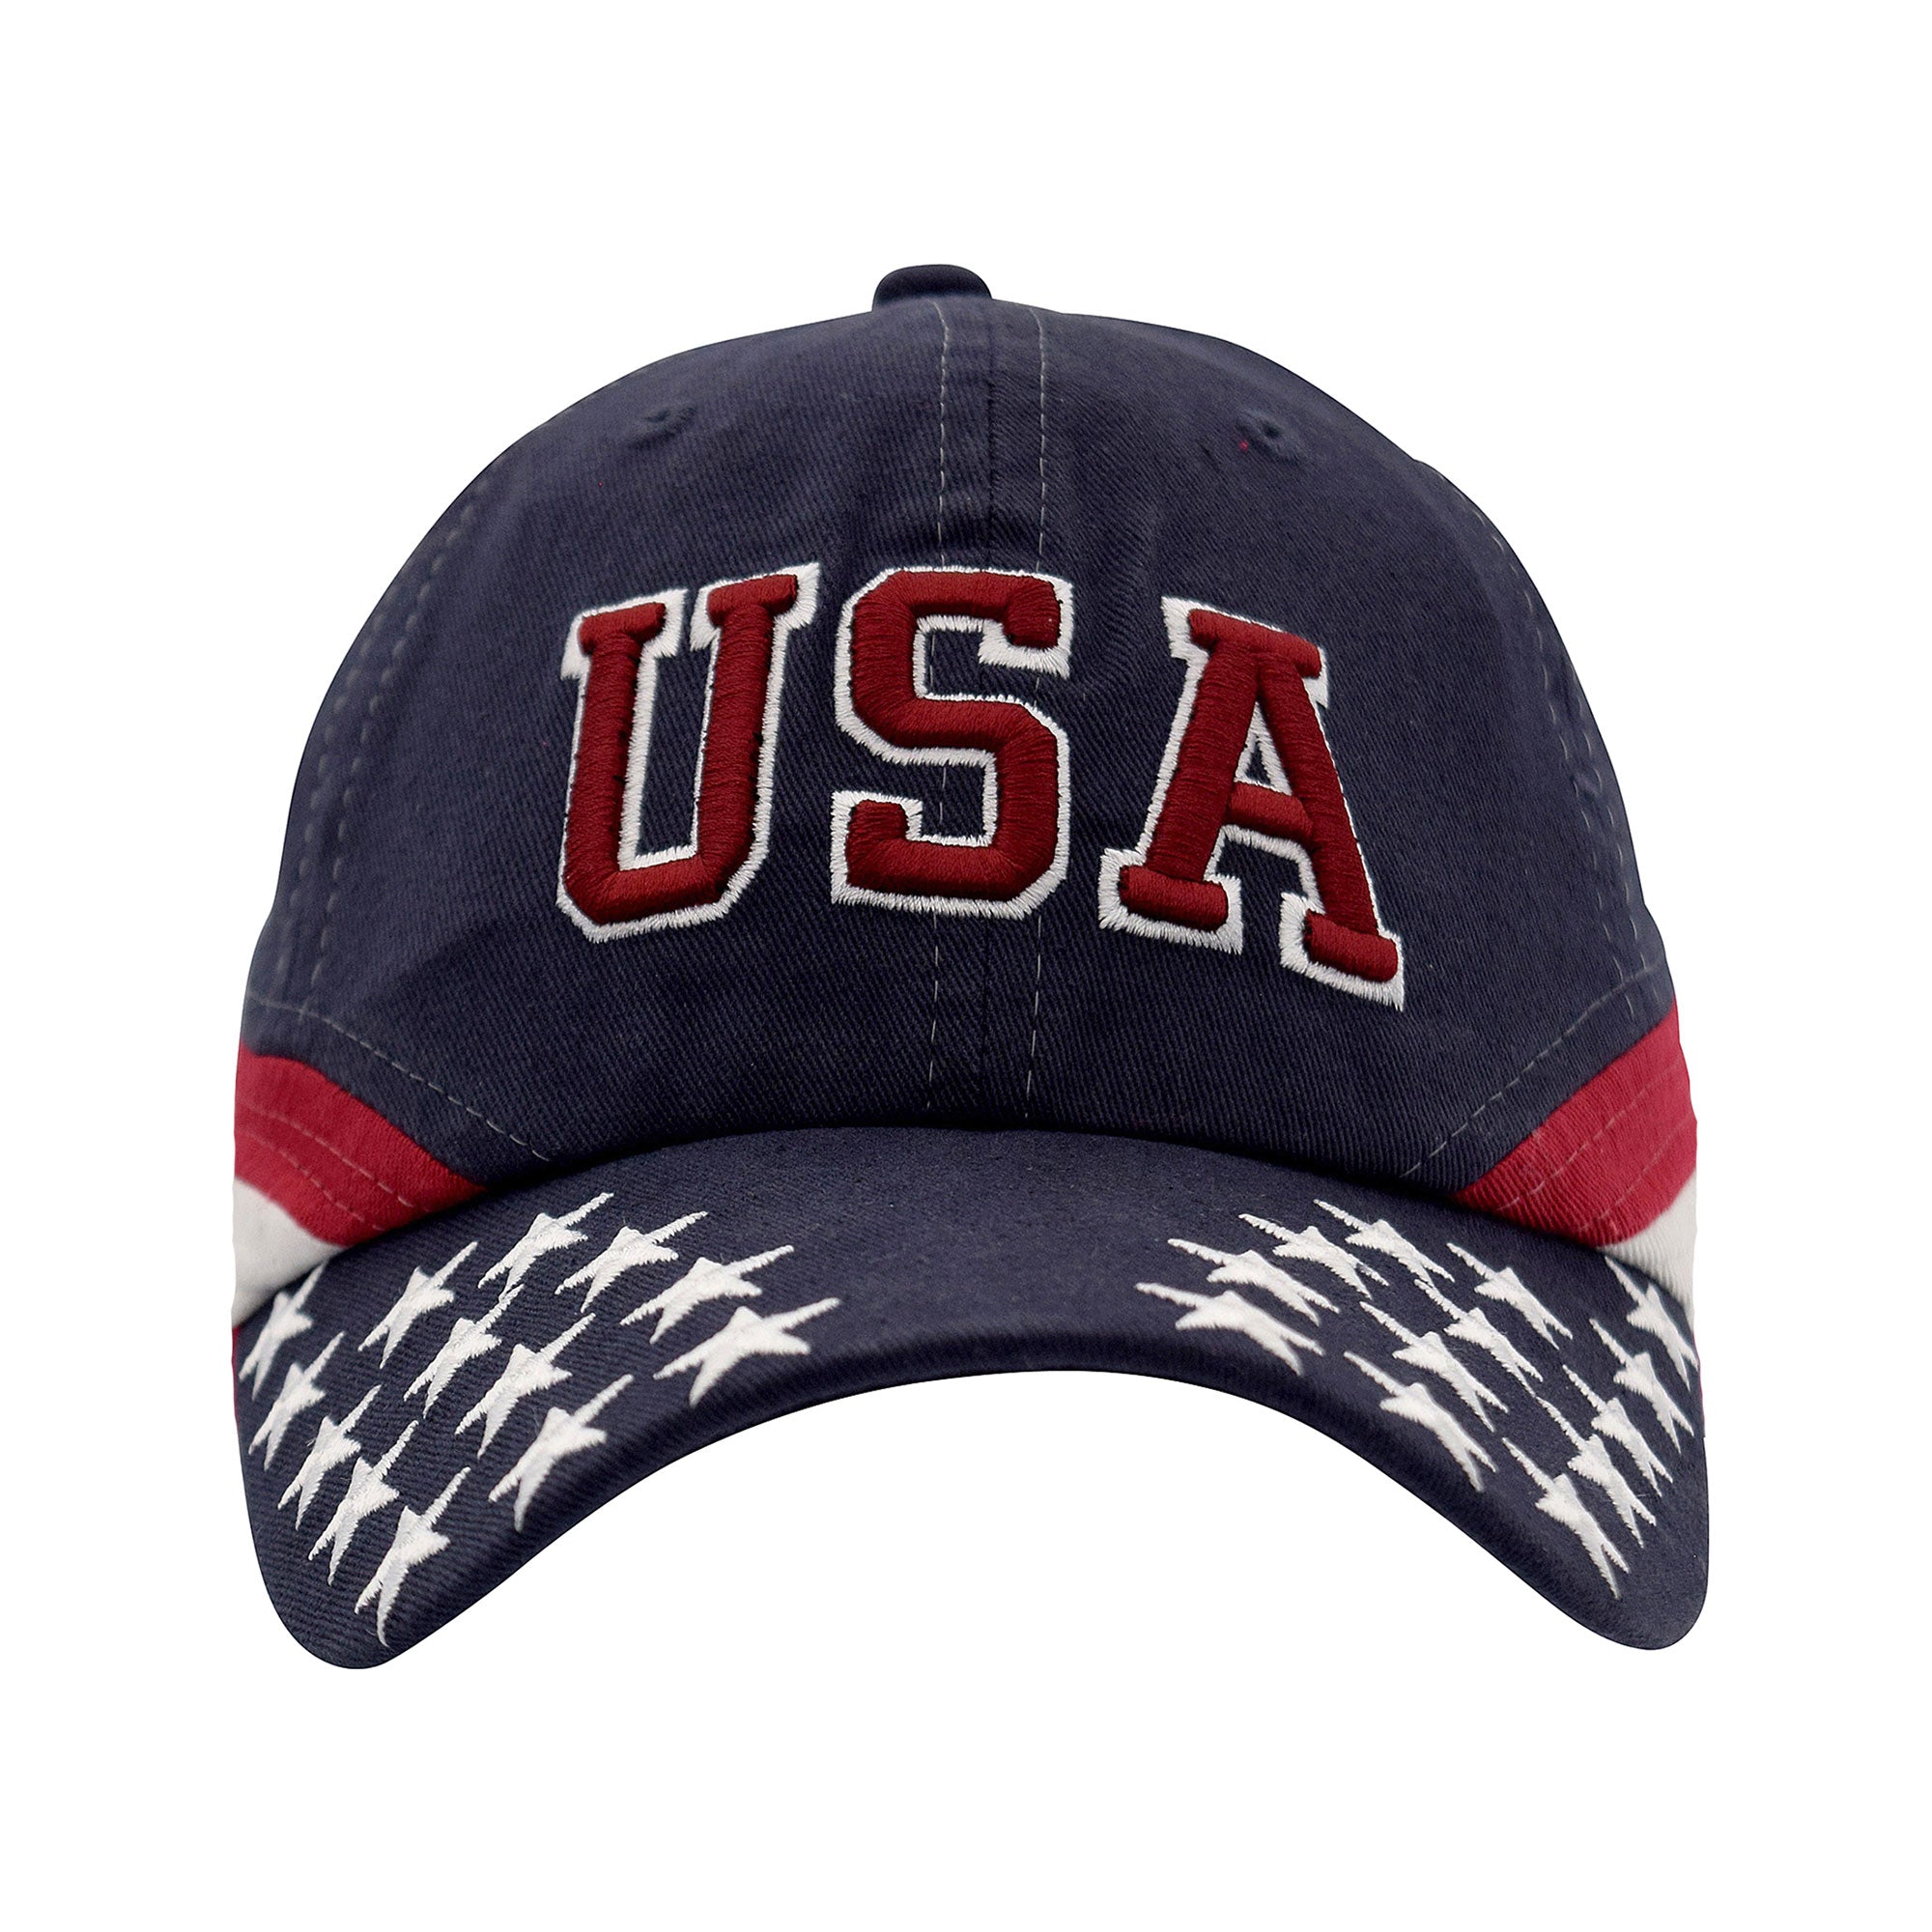 Official MLB Stars & Stripes Gear, MLB 4th of July Hats, USA Tees